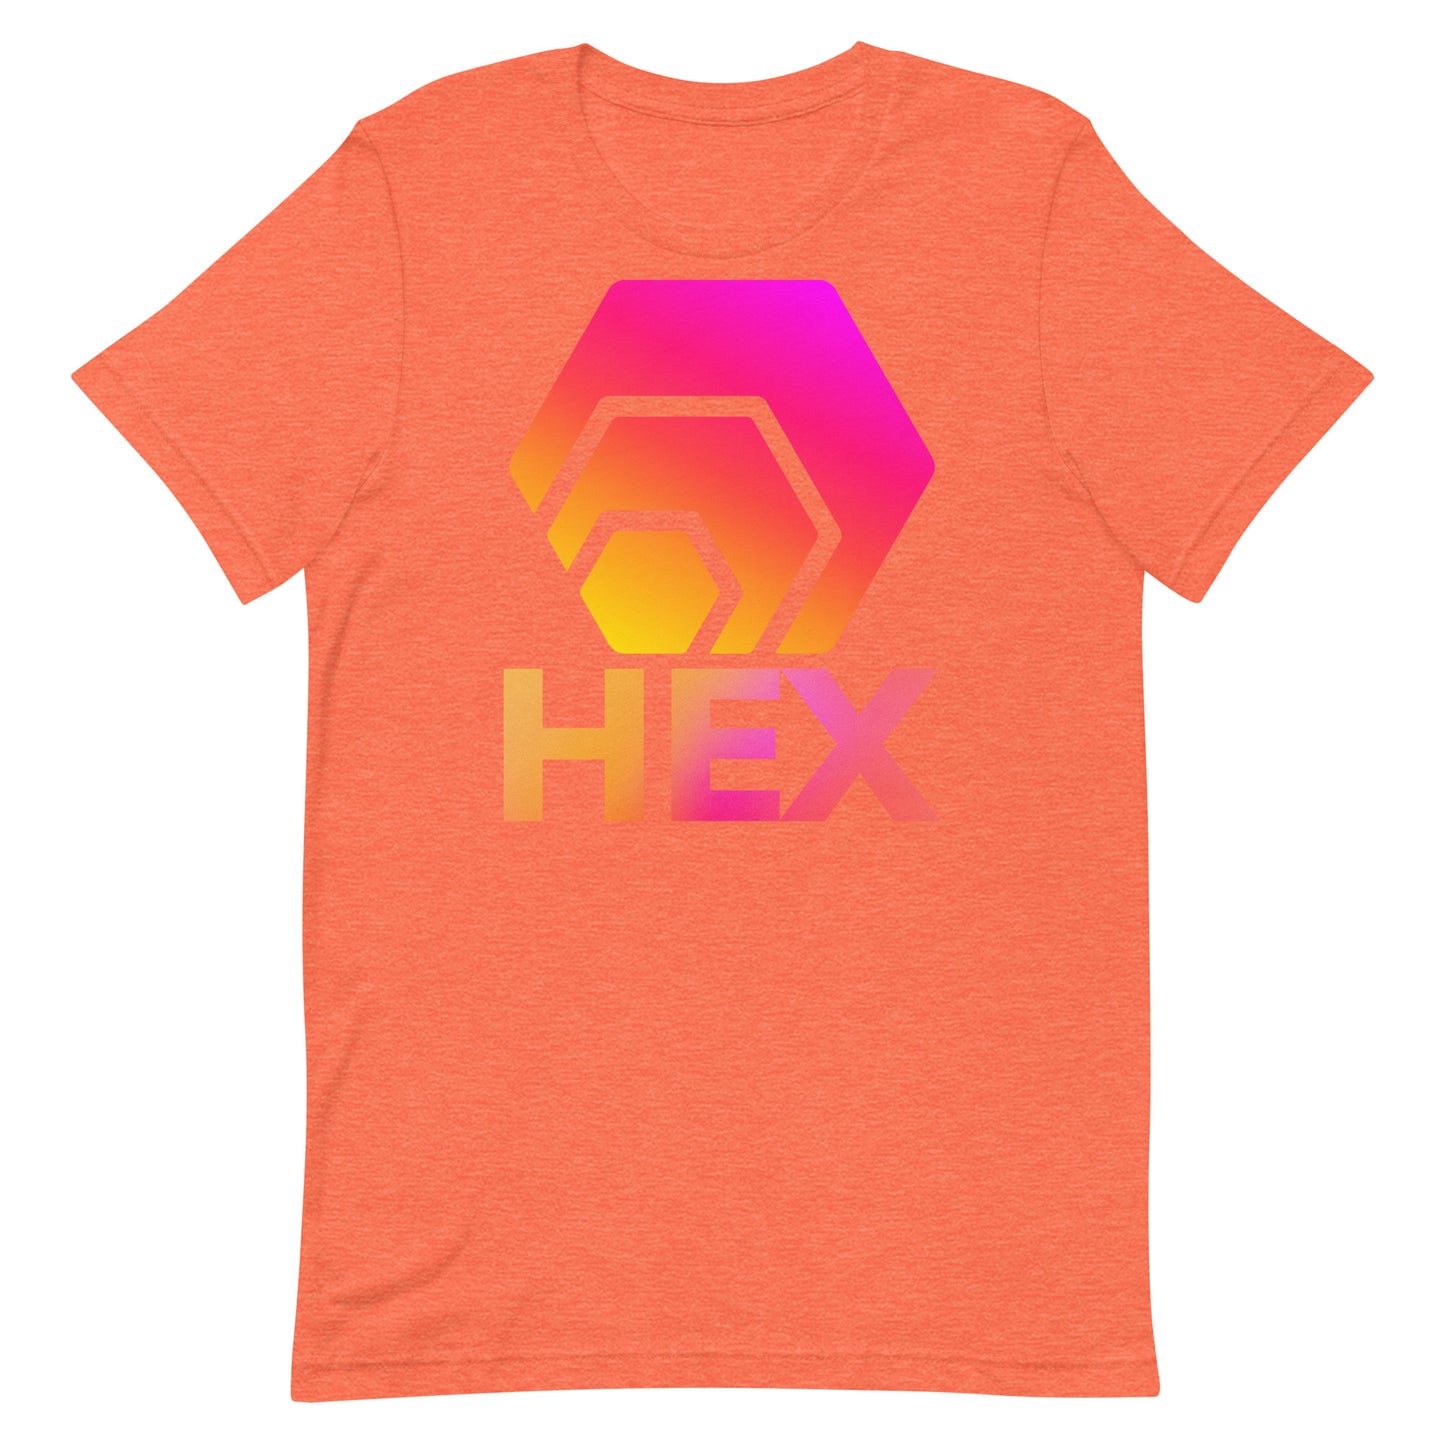 HEX Unisex T-Shirt